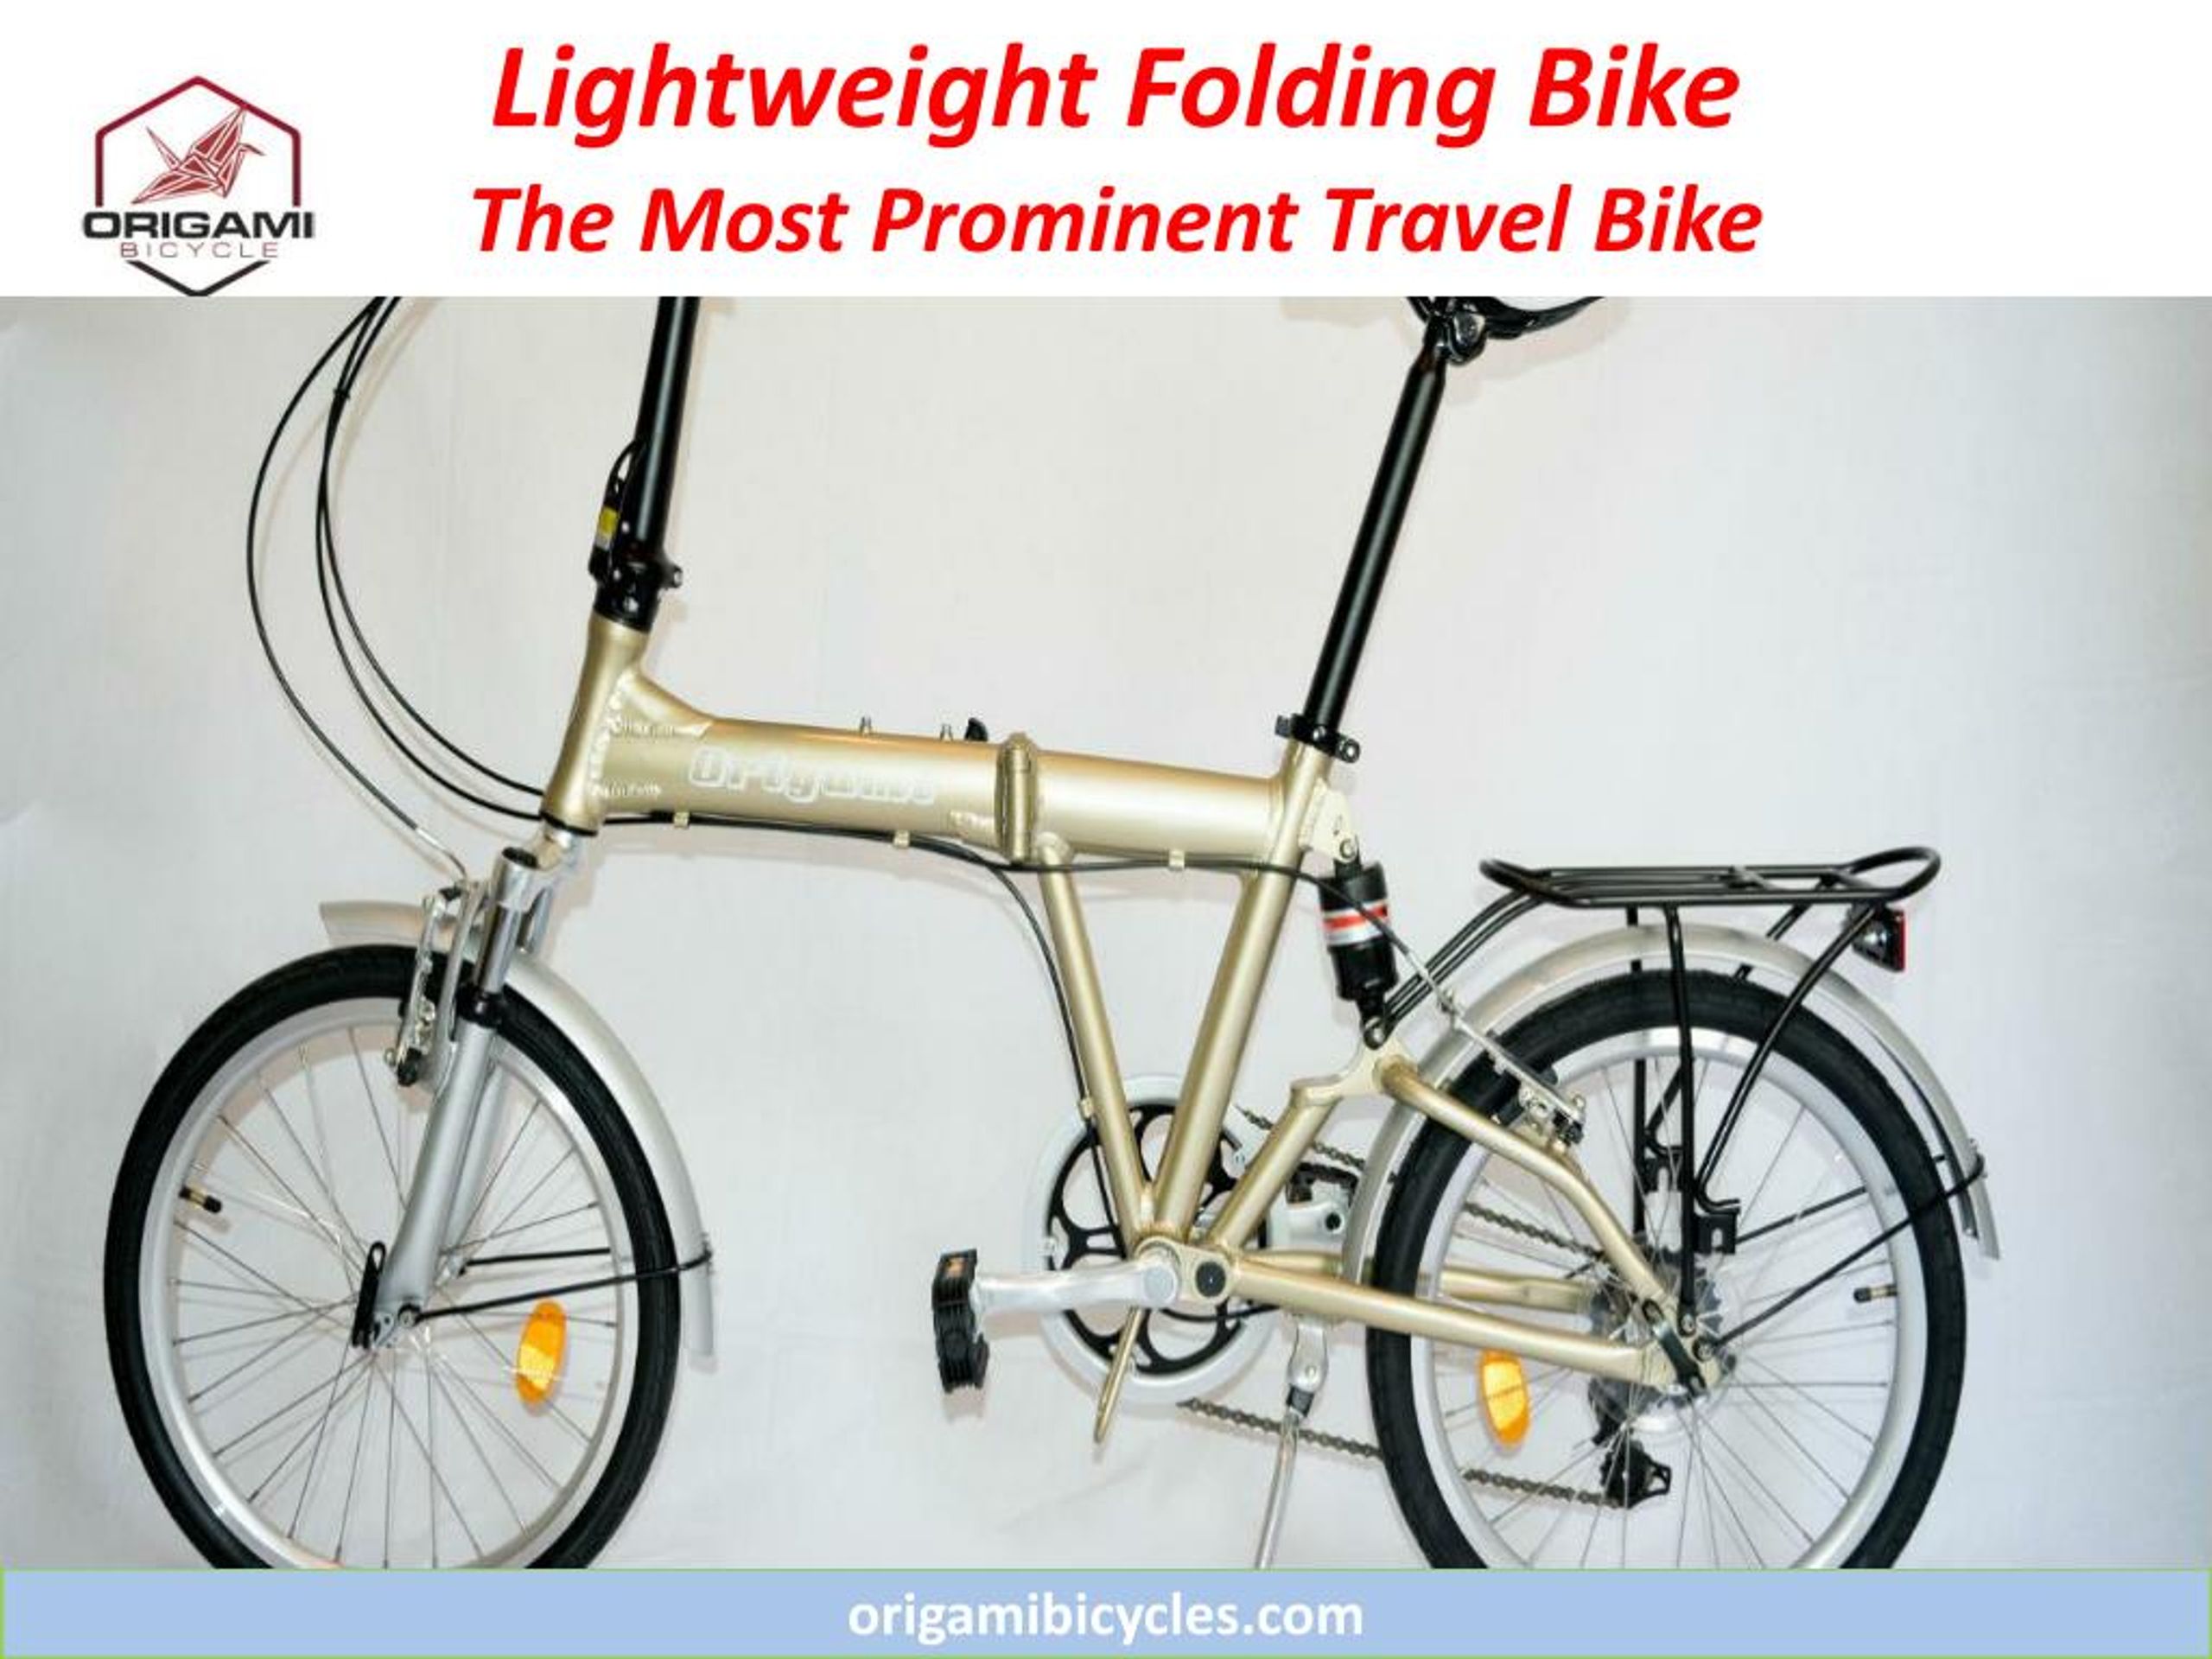 lightweight folding bicycle